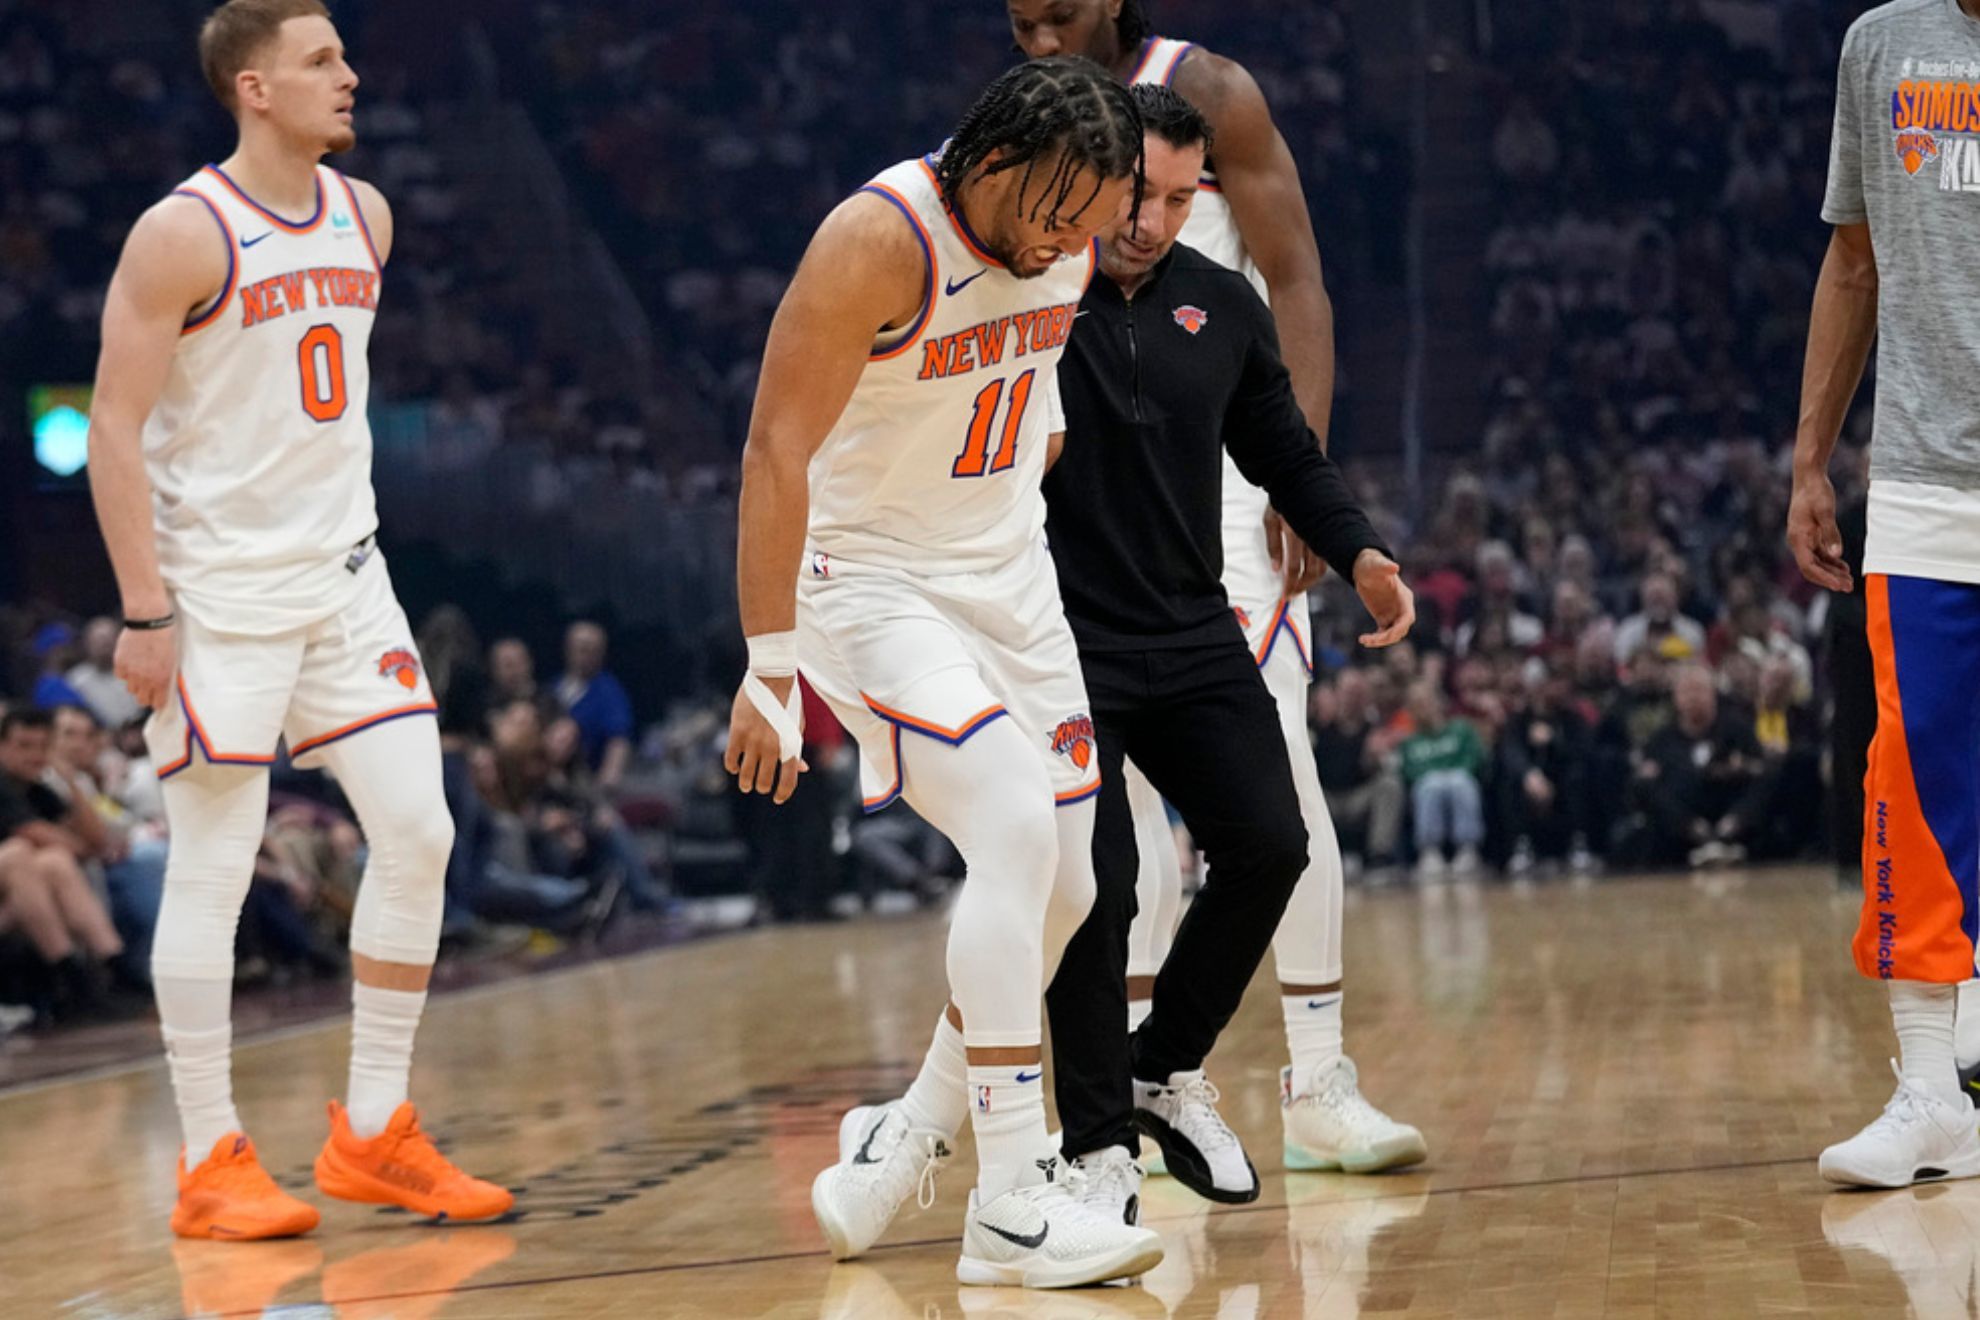 New York Knicks News - Latest New York Knicks News & Rumors